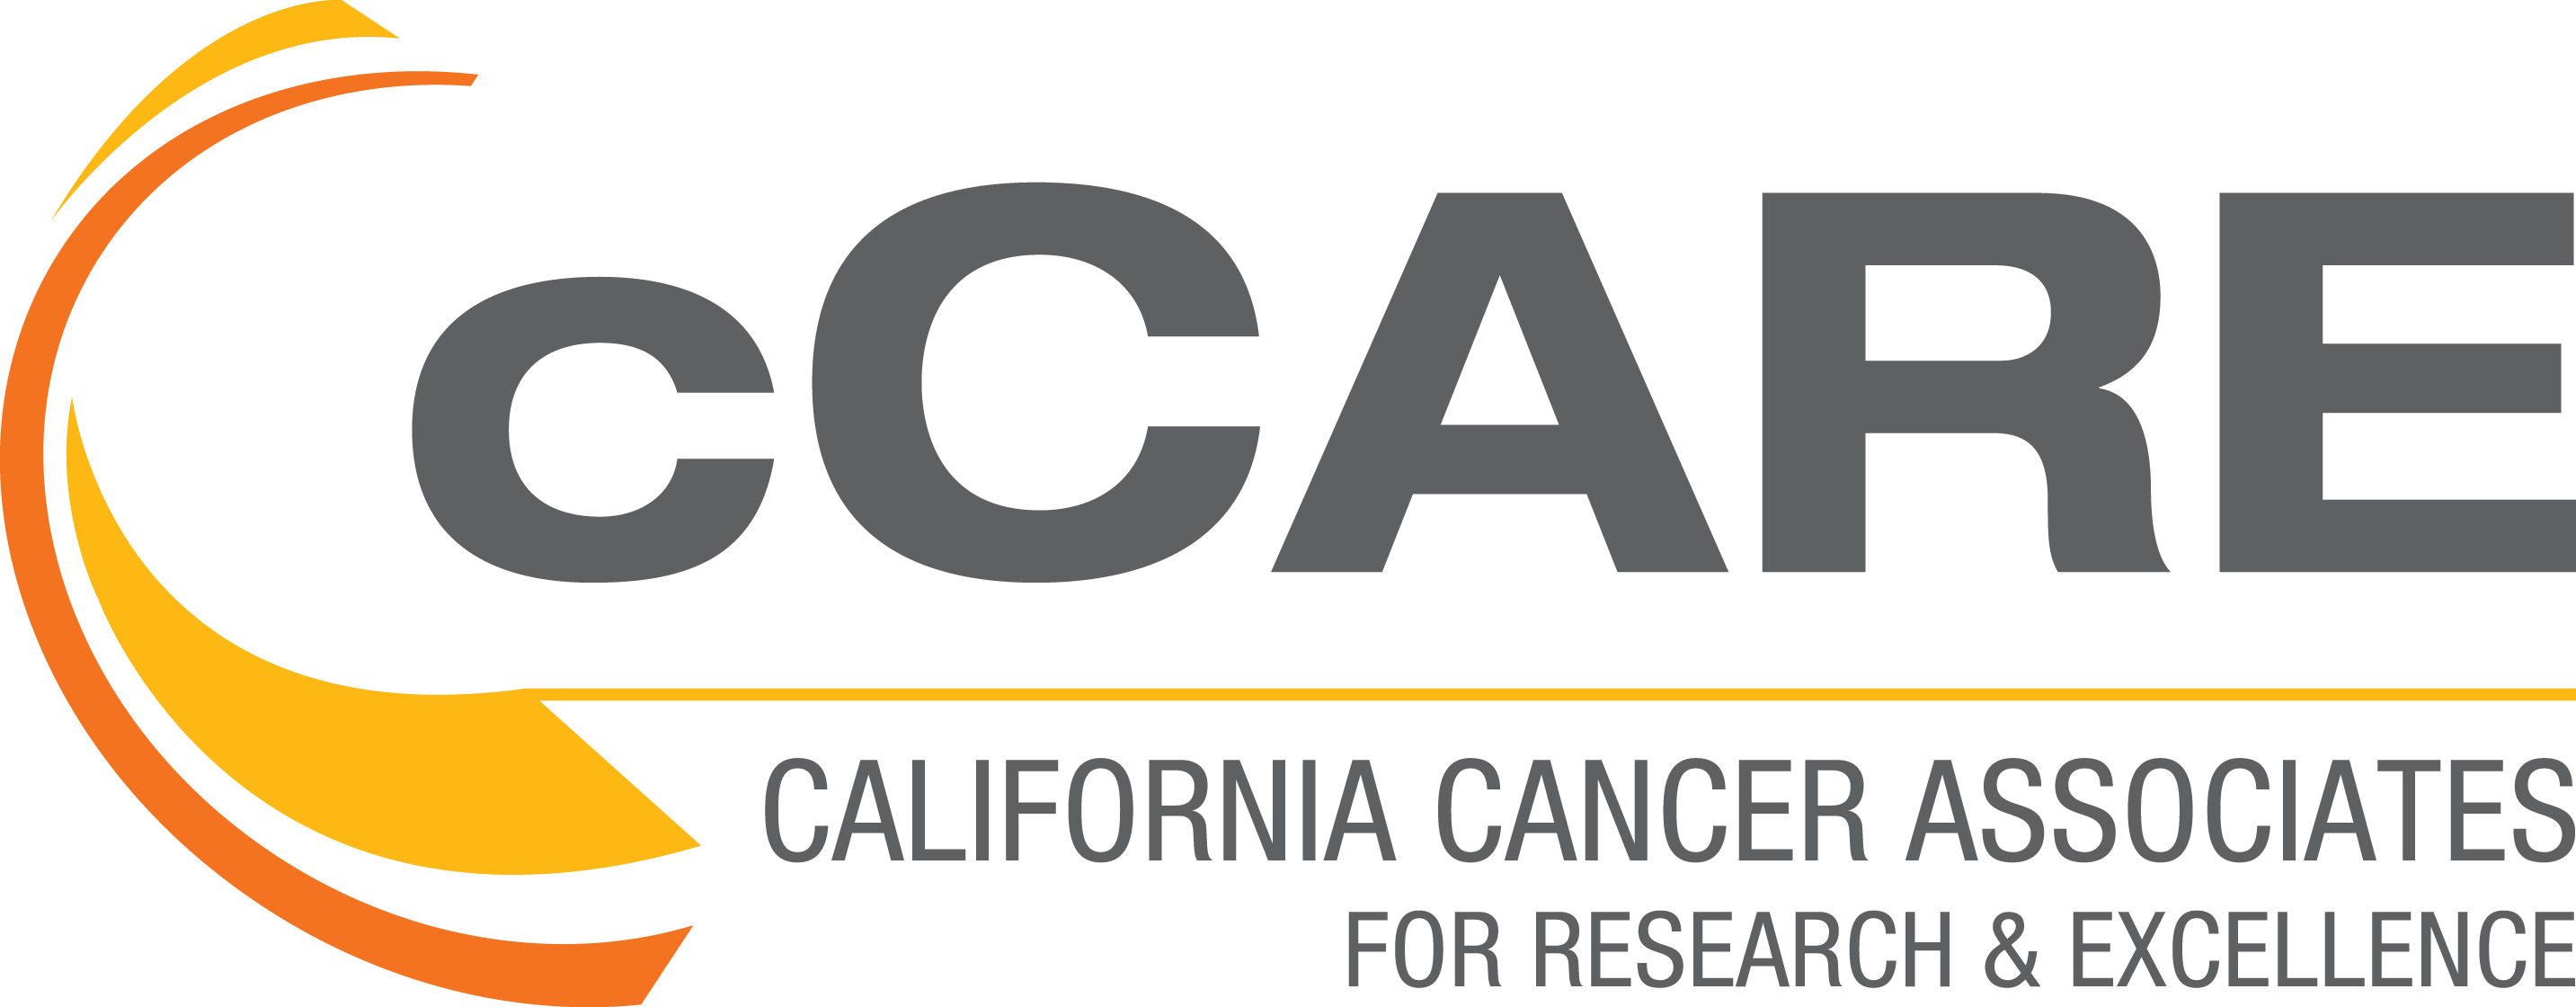 California Cancer Associates